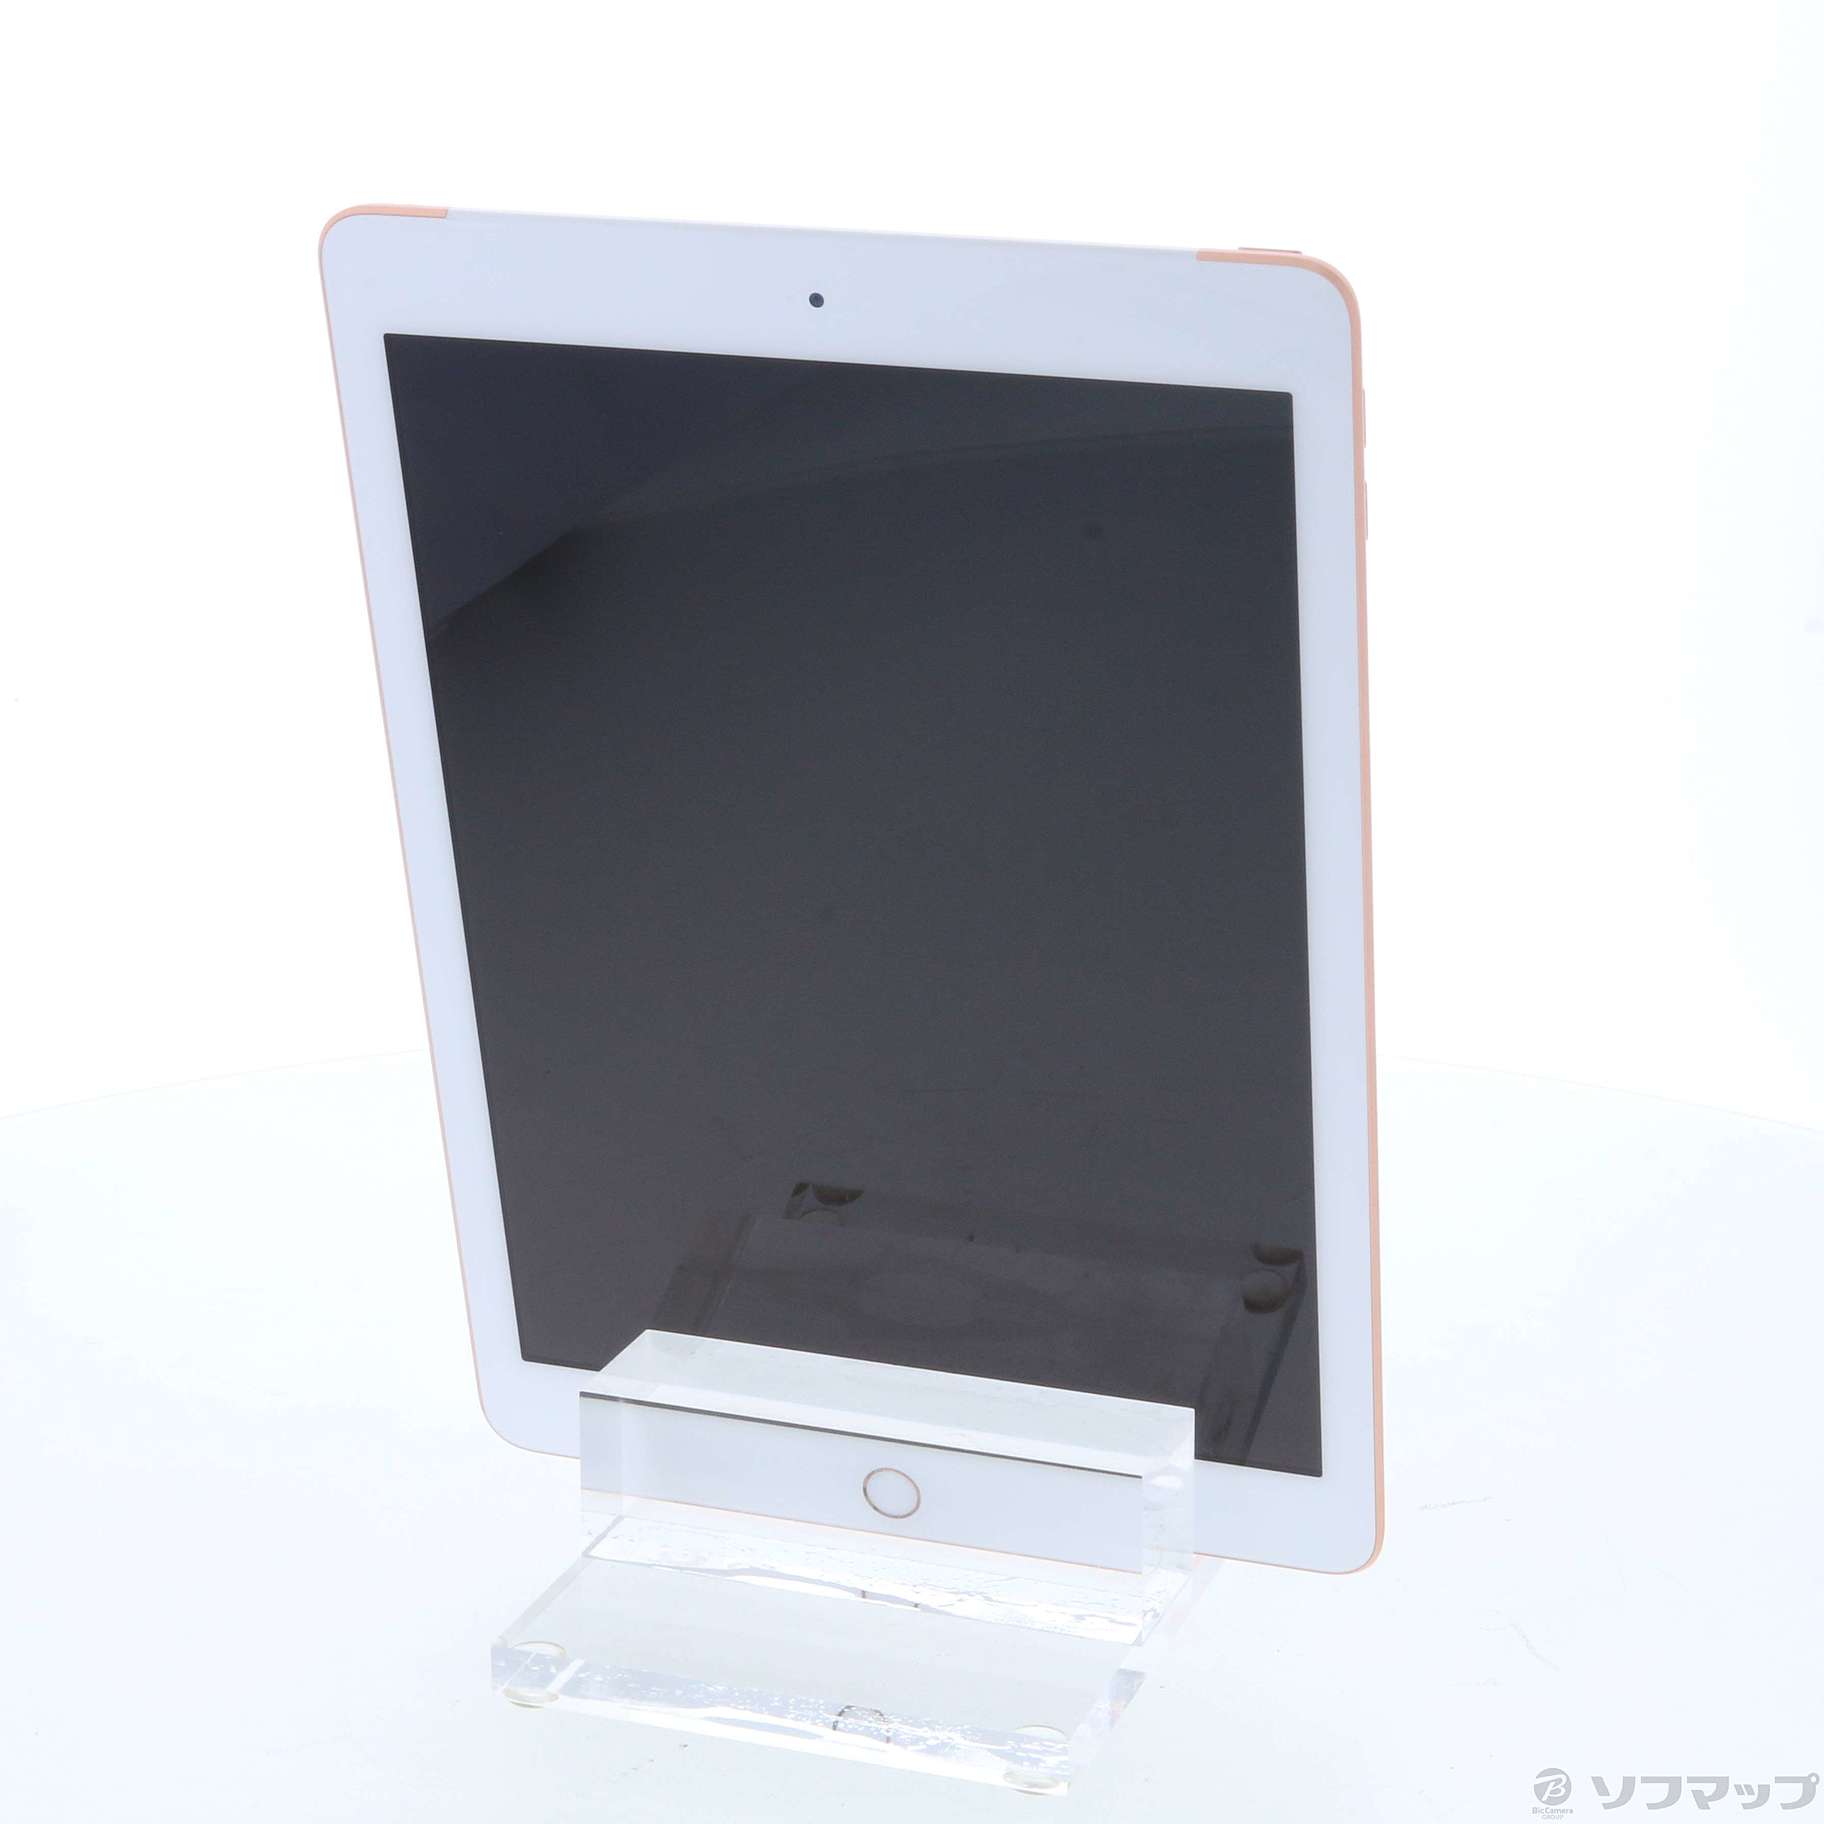 Apple iPad 第6世代 ピンク 32GB MRM02J/A